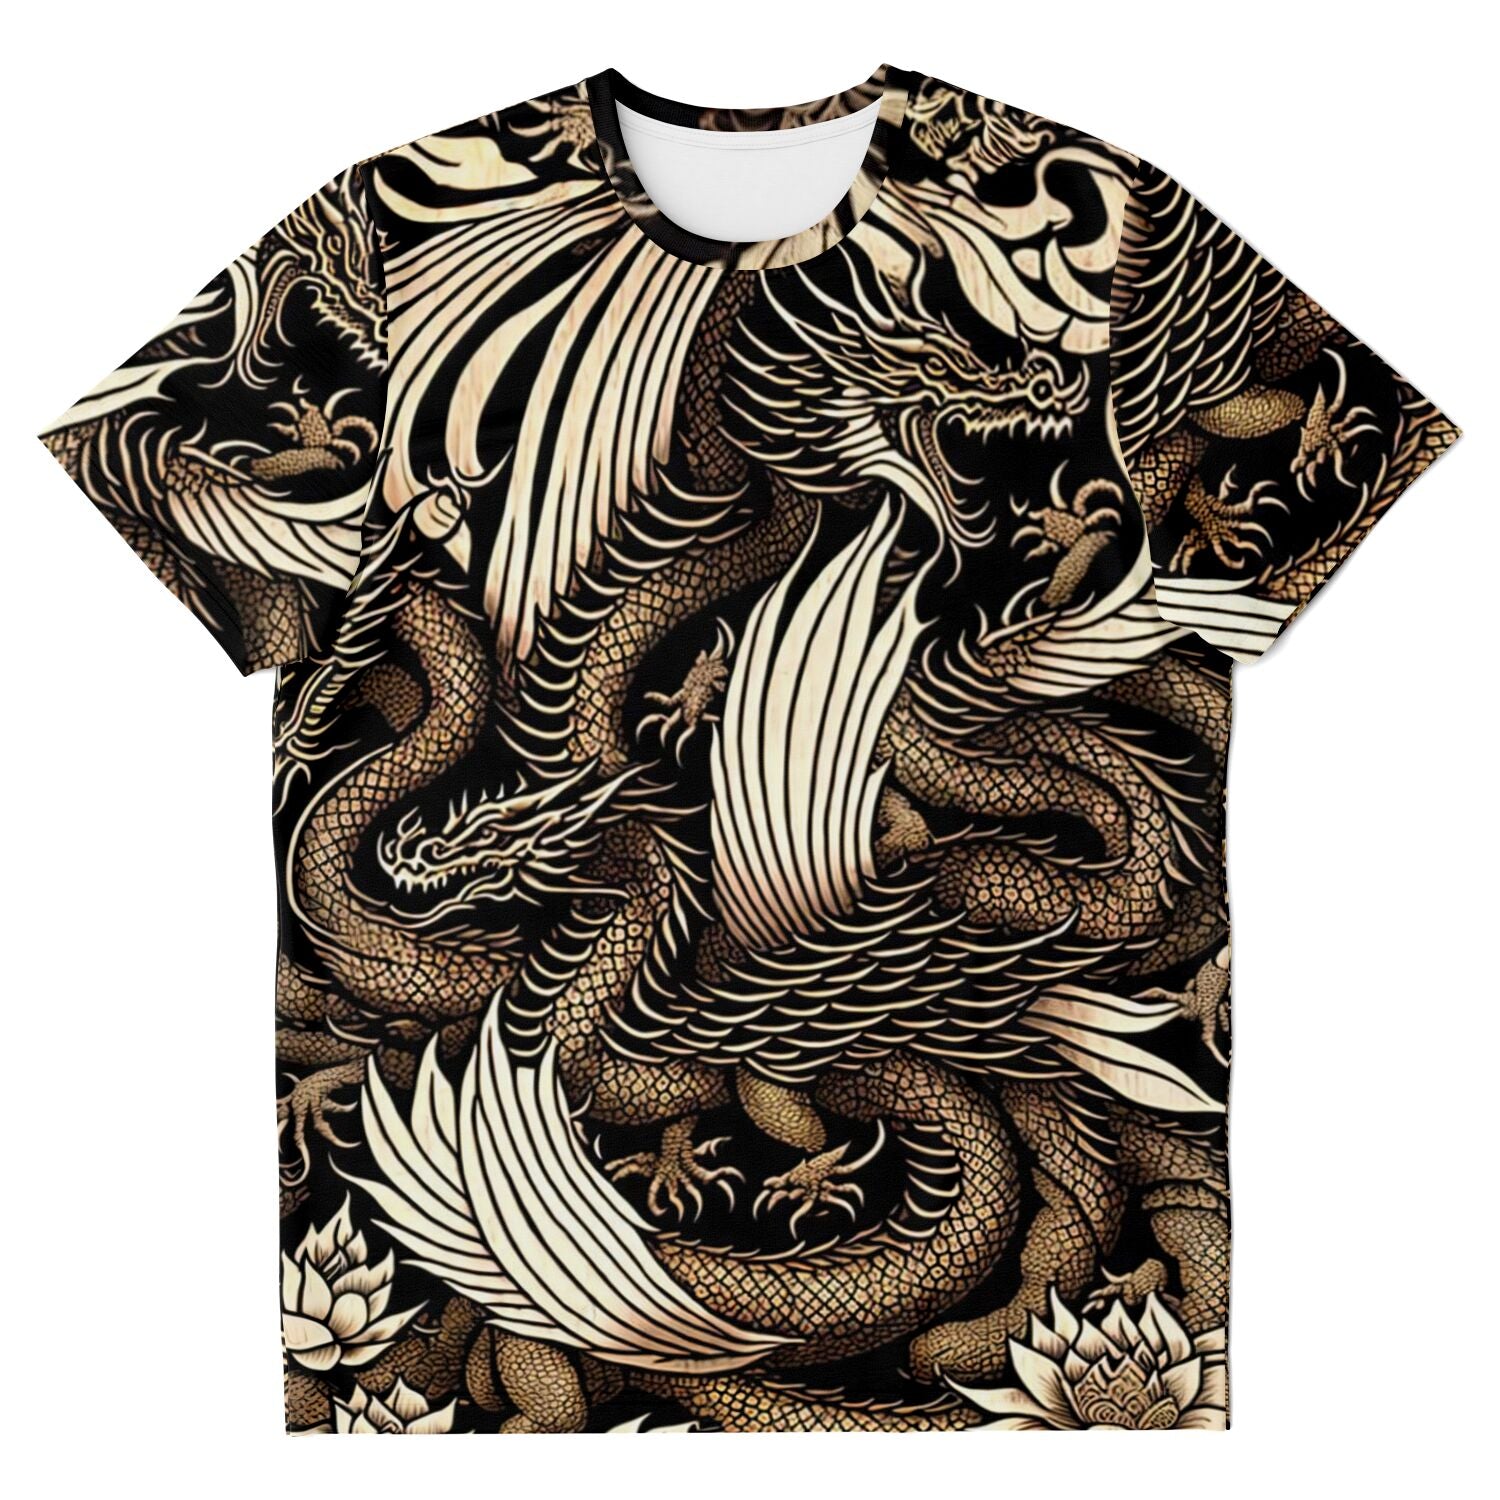 T-shirt XS Medieval Basilisk: Ancient Greek Mythology | King of Serpents, Snakes | Golden Scaled Dragon, Reptile Graphic Art T-Shirt